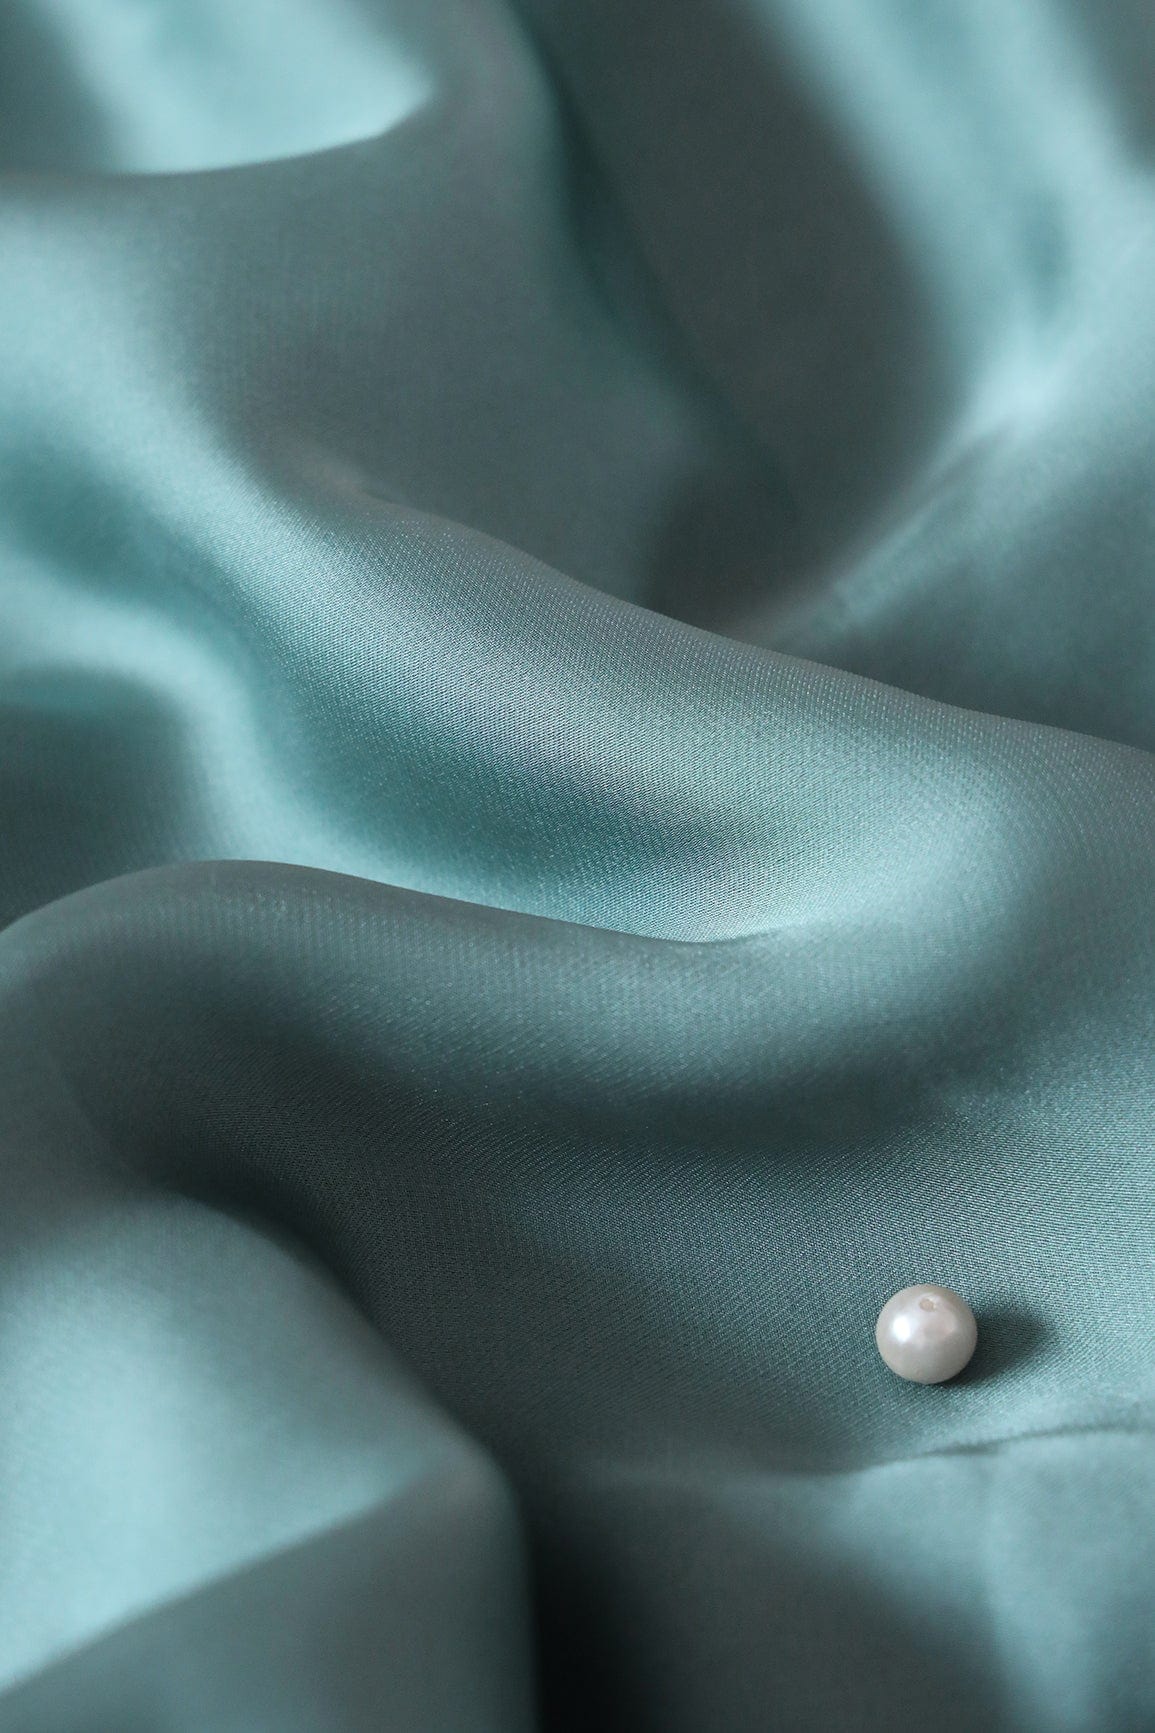 doeraa Plain Fabrics Teal Blue Dyed Georgette Satin Fabric